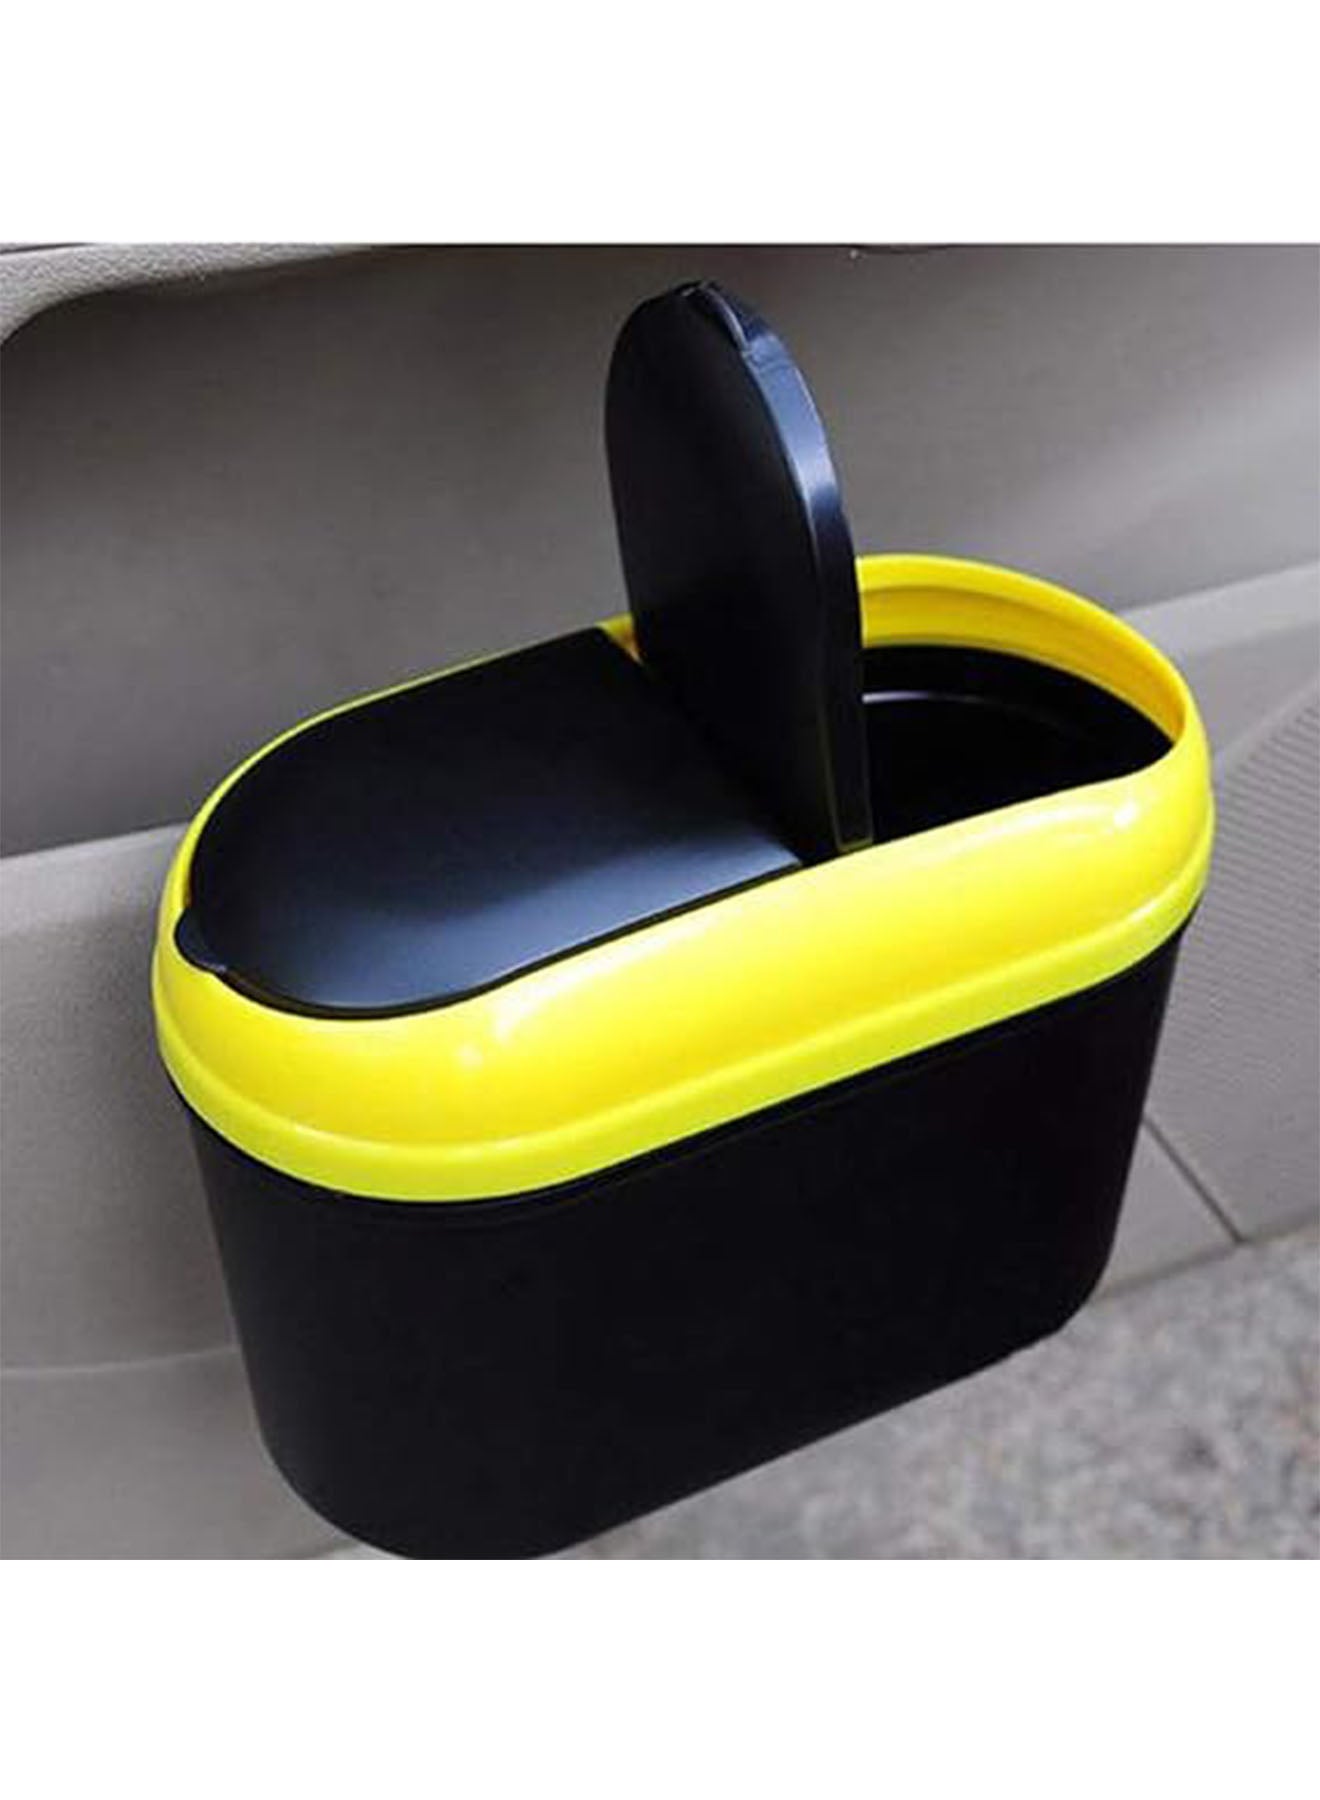 DANIM Mini Car Trash can Plastic Storage box Cup-shaped Trash Can auto Supplies trash can car Storage Accessories